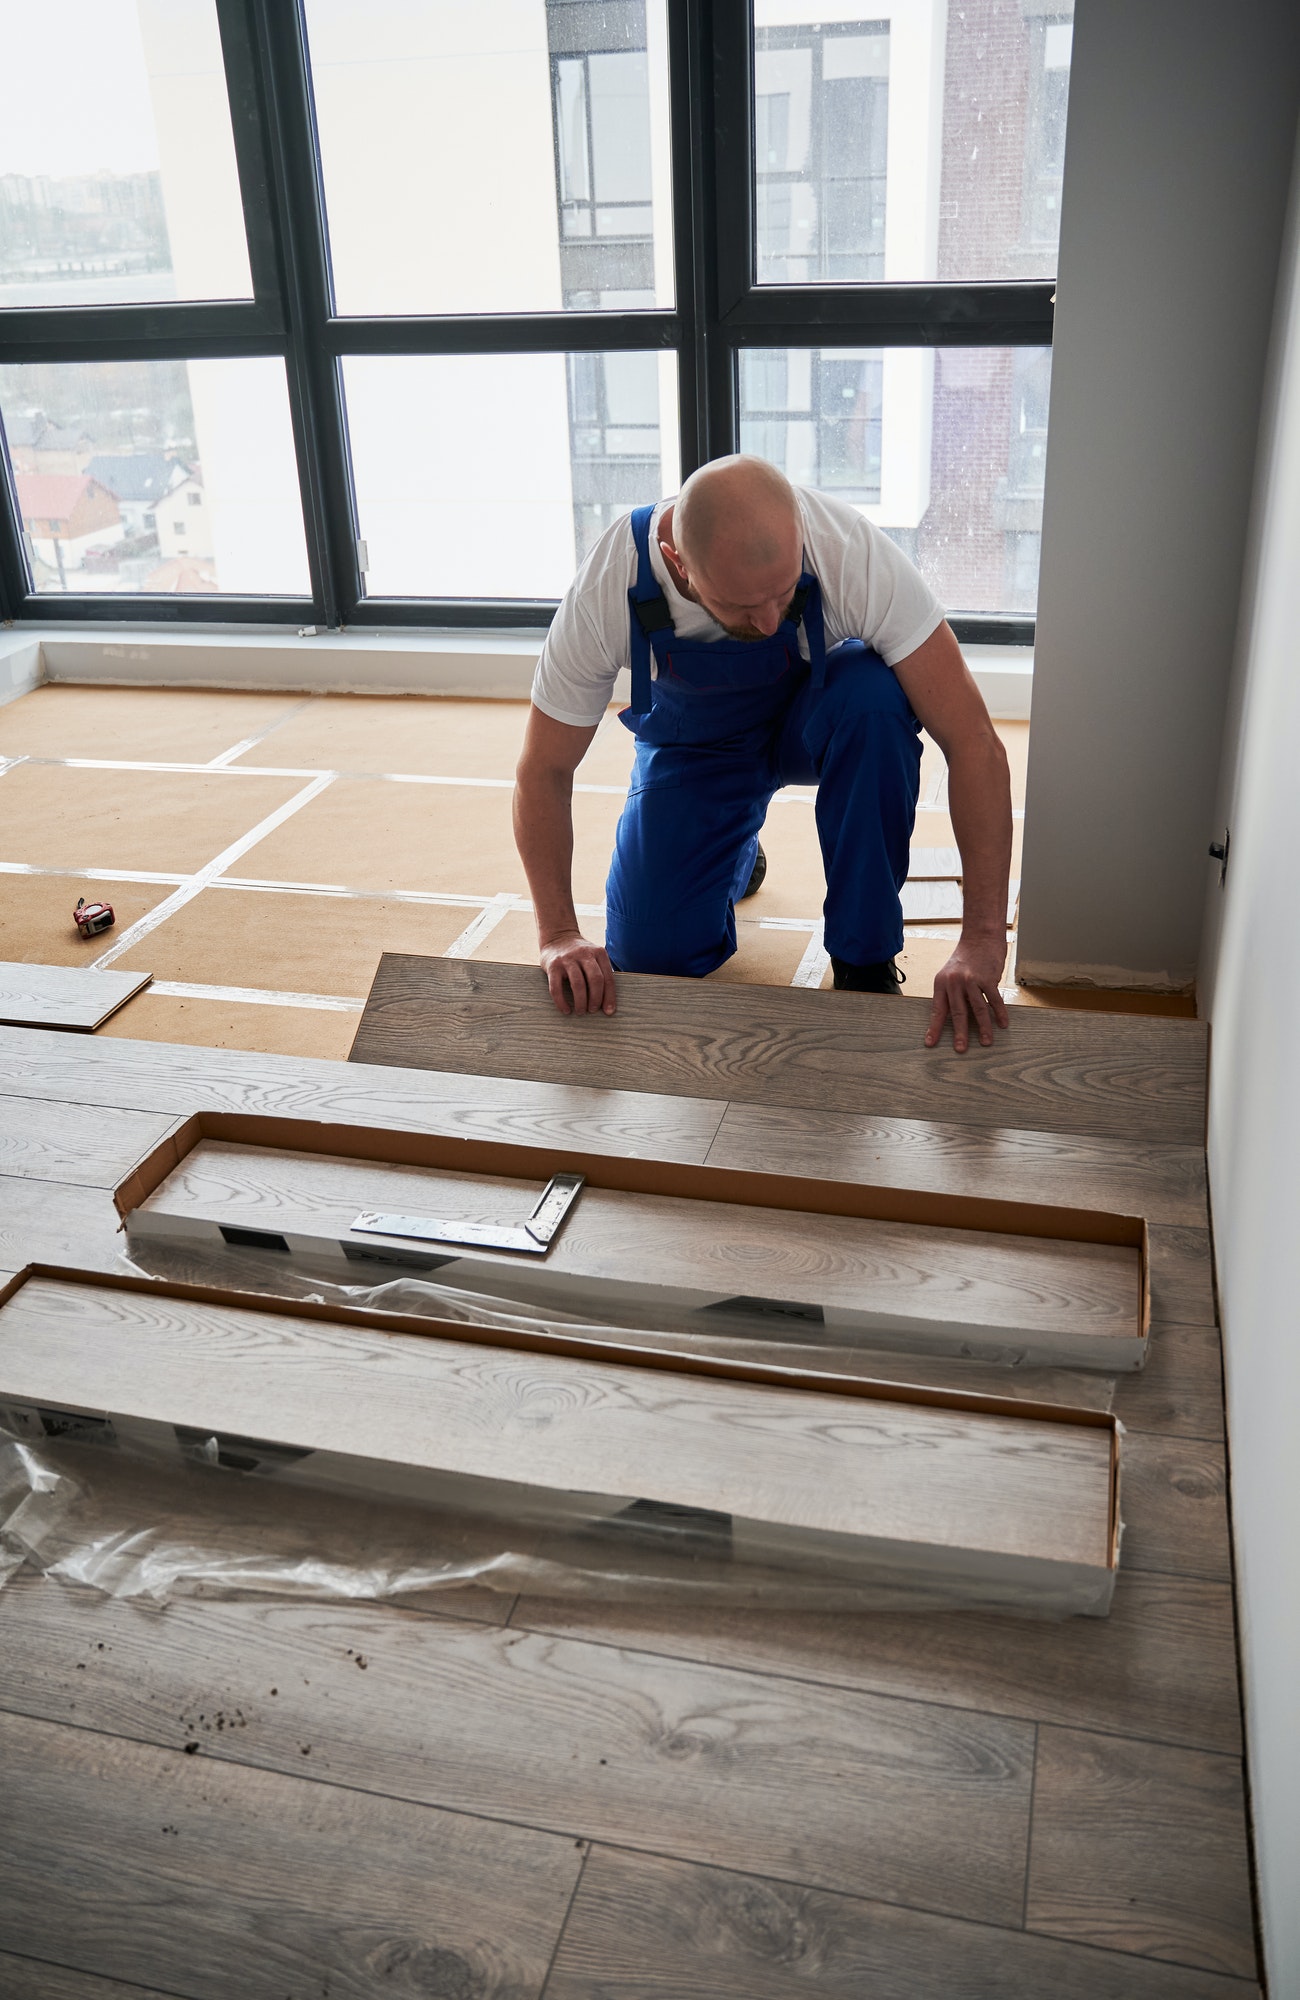 Man installing laminate flooring in apartment under renovation.